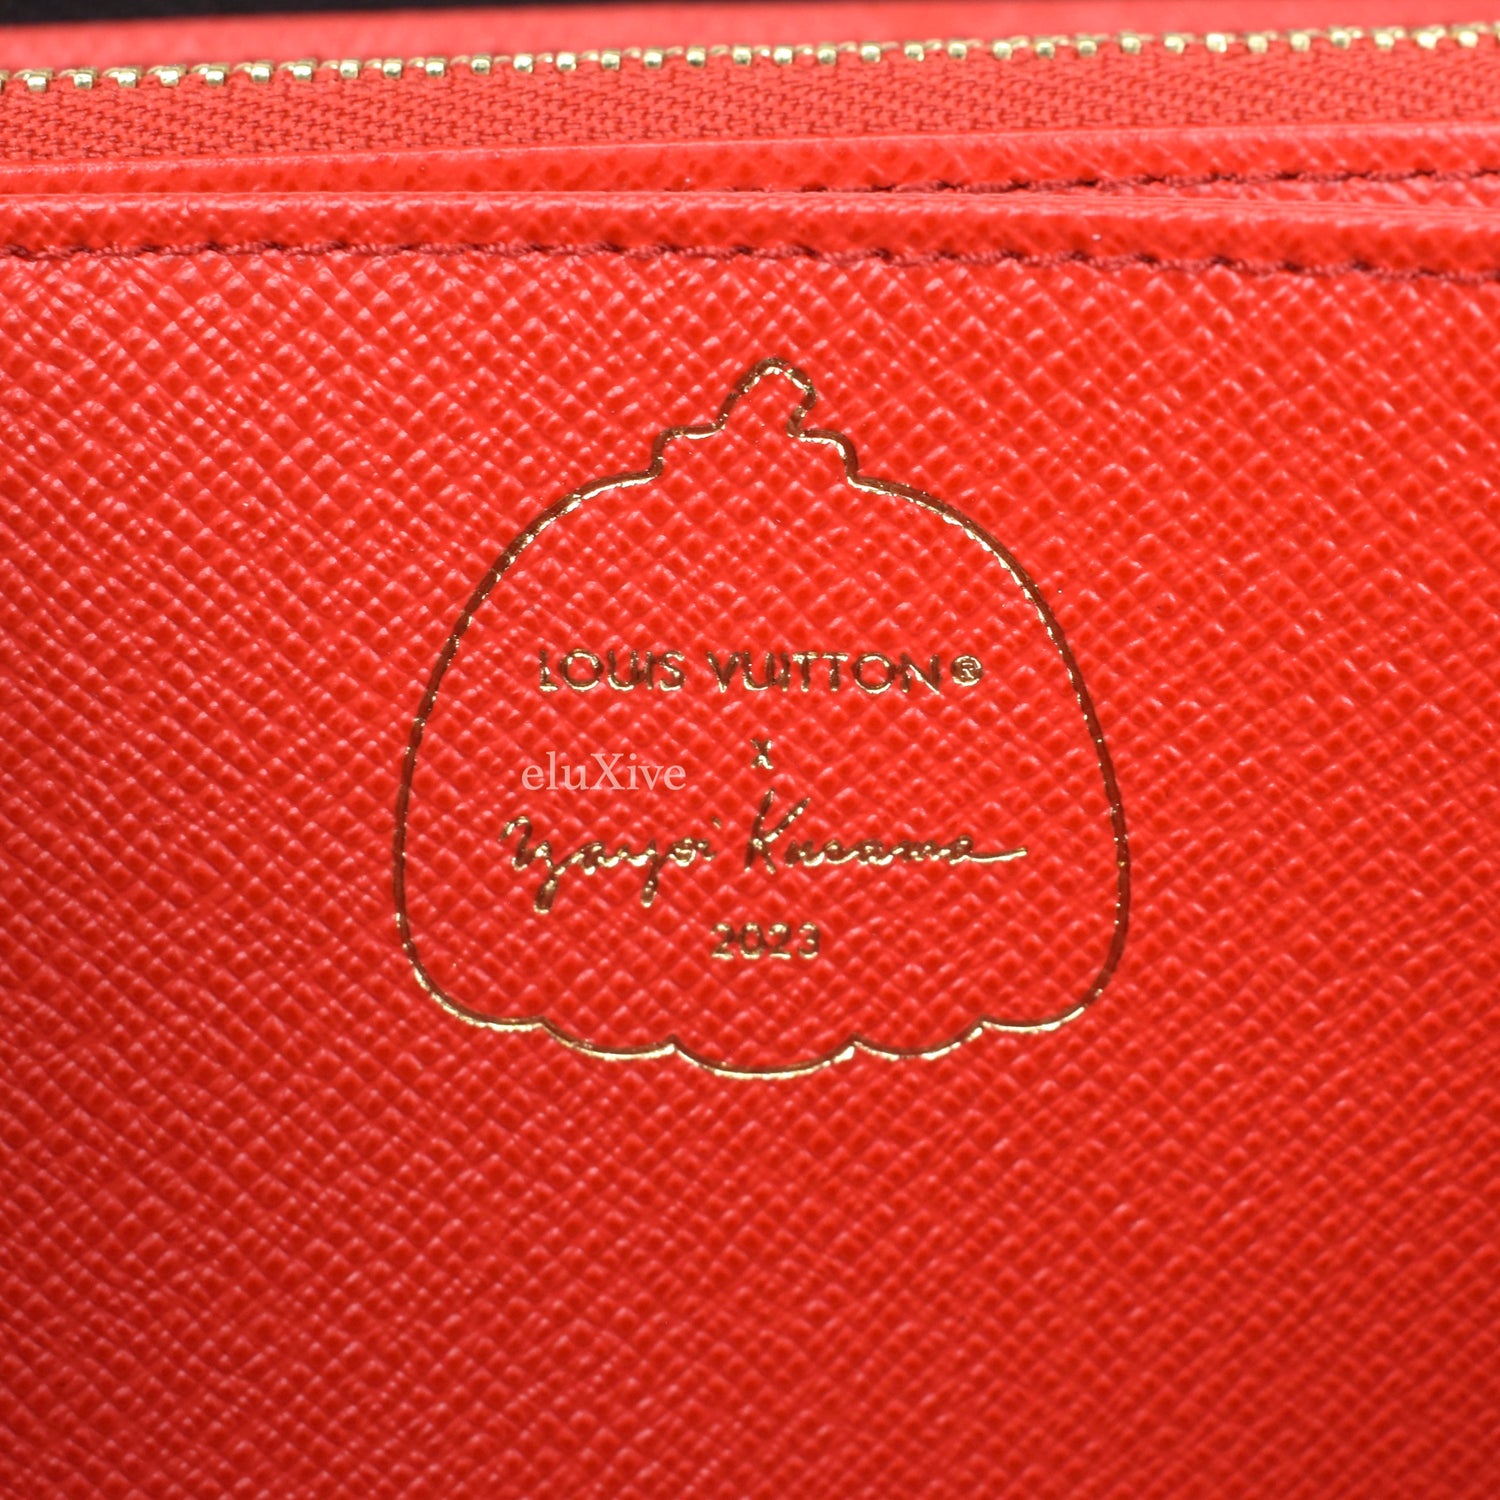 Yayoi Kusama x Louis Vuitton Blue Monogram Dots Infinity Zippy Wallet  QJA0FK1GBB004